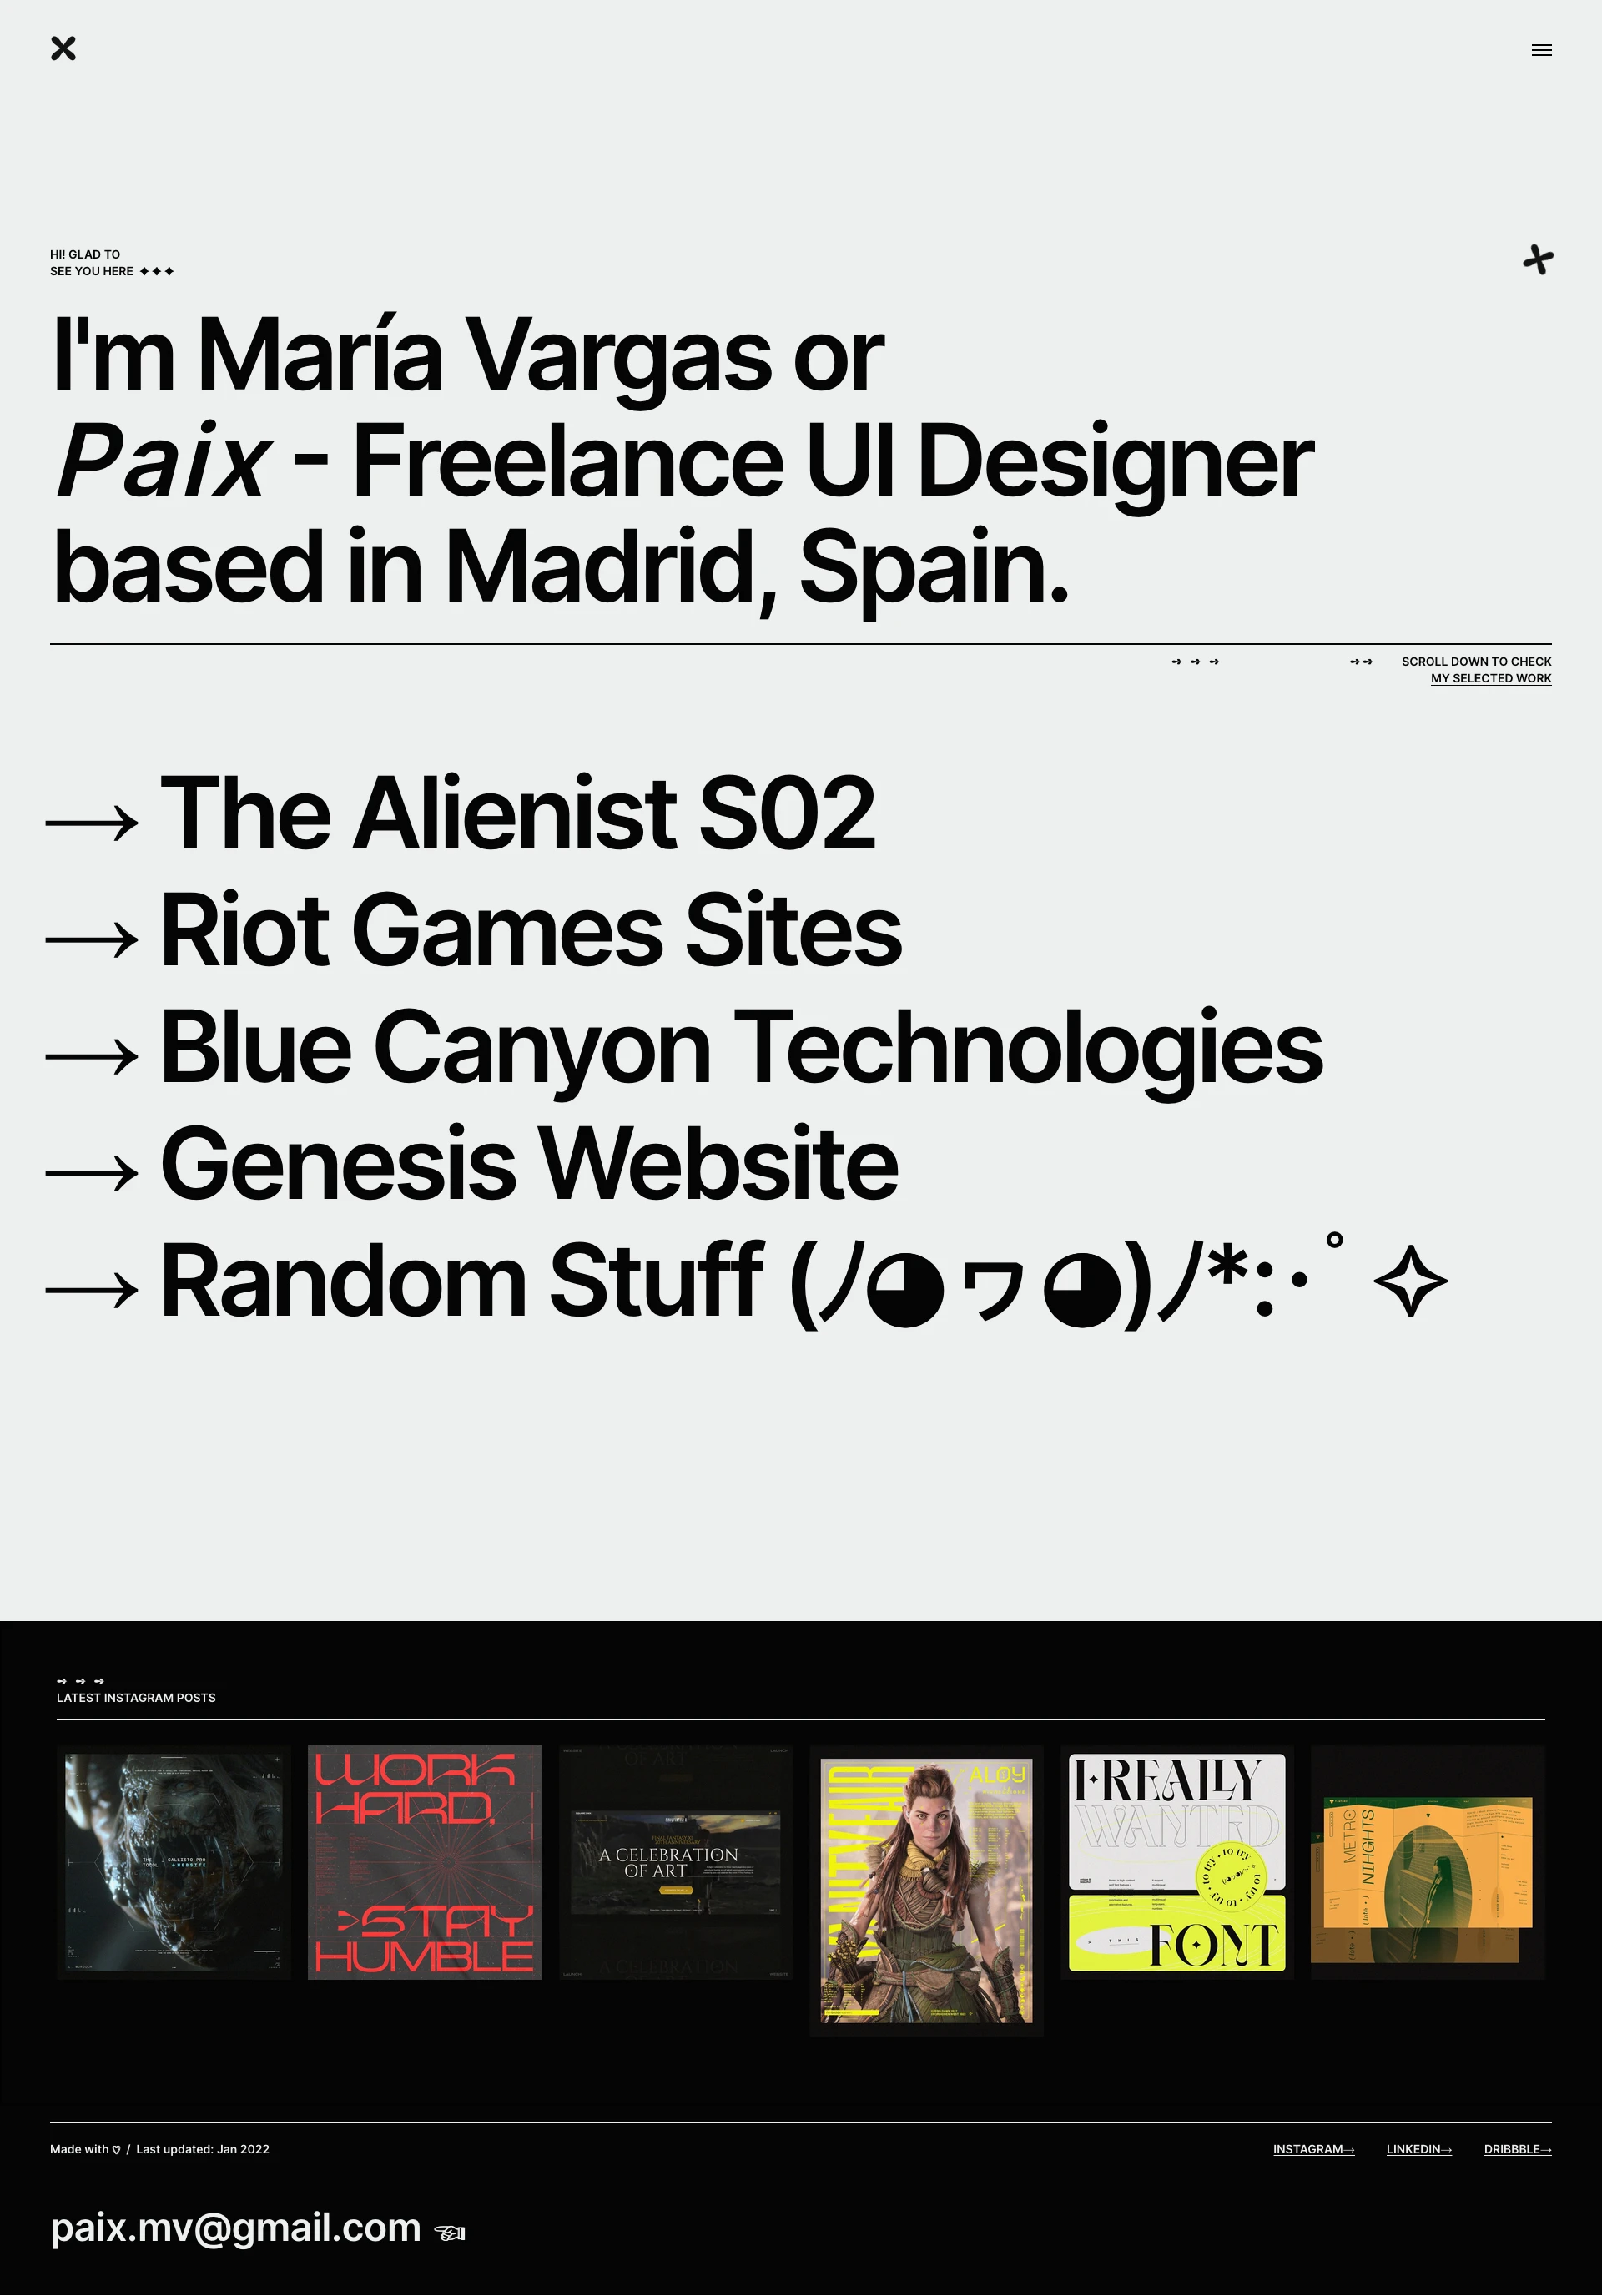 Paix Landing Page Example: I'm María Vargas or Paix - Freelance UI Designer based in Madrid, Spain.